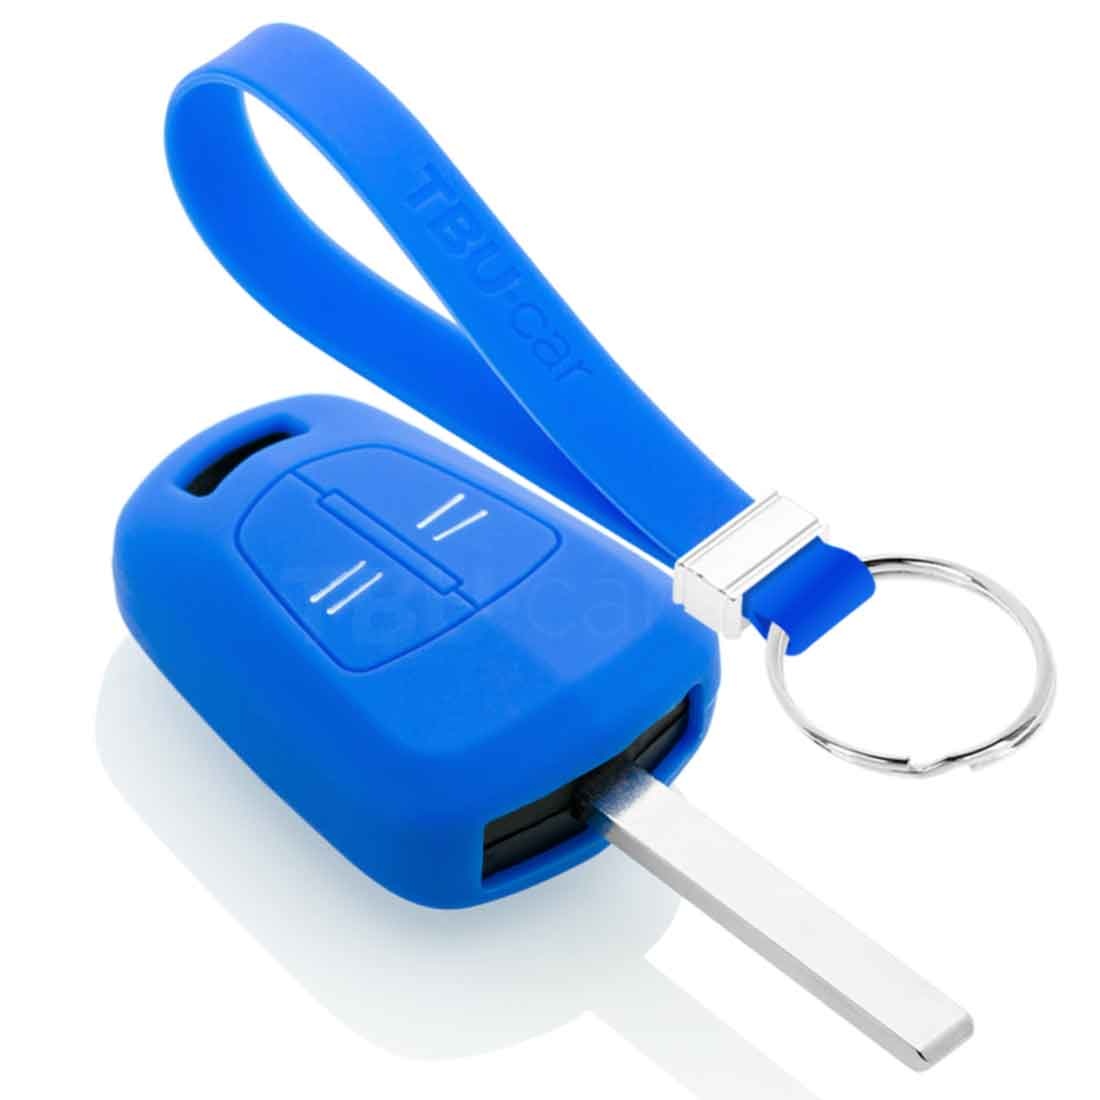 TBU car TBU car Autoschlüssel Hülle kompatibel mit Opel 2 Tasten - Schutzhülle aus Silikon - Auto Schlüsselhülle Cover in Blau